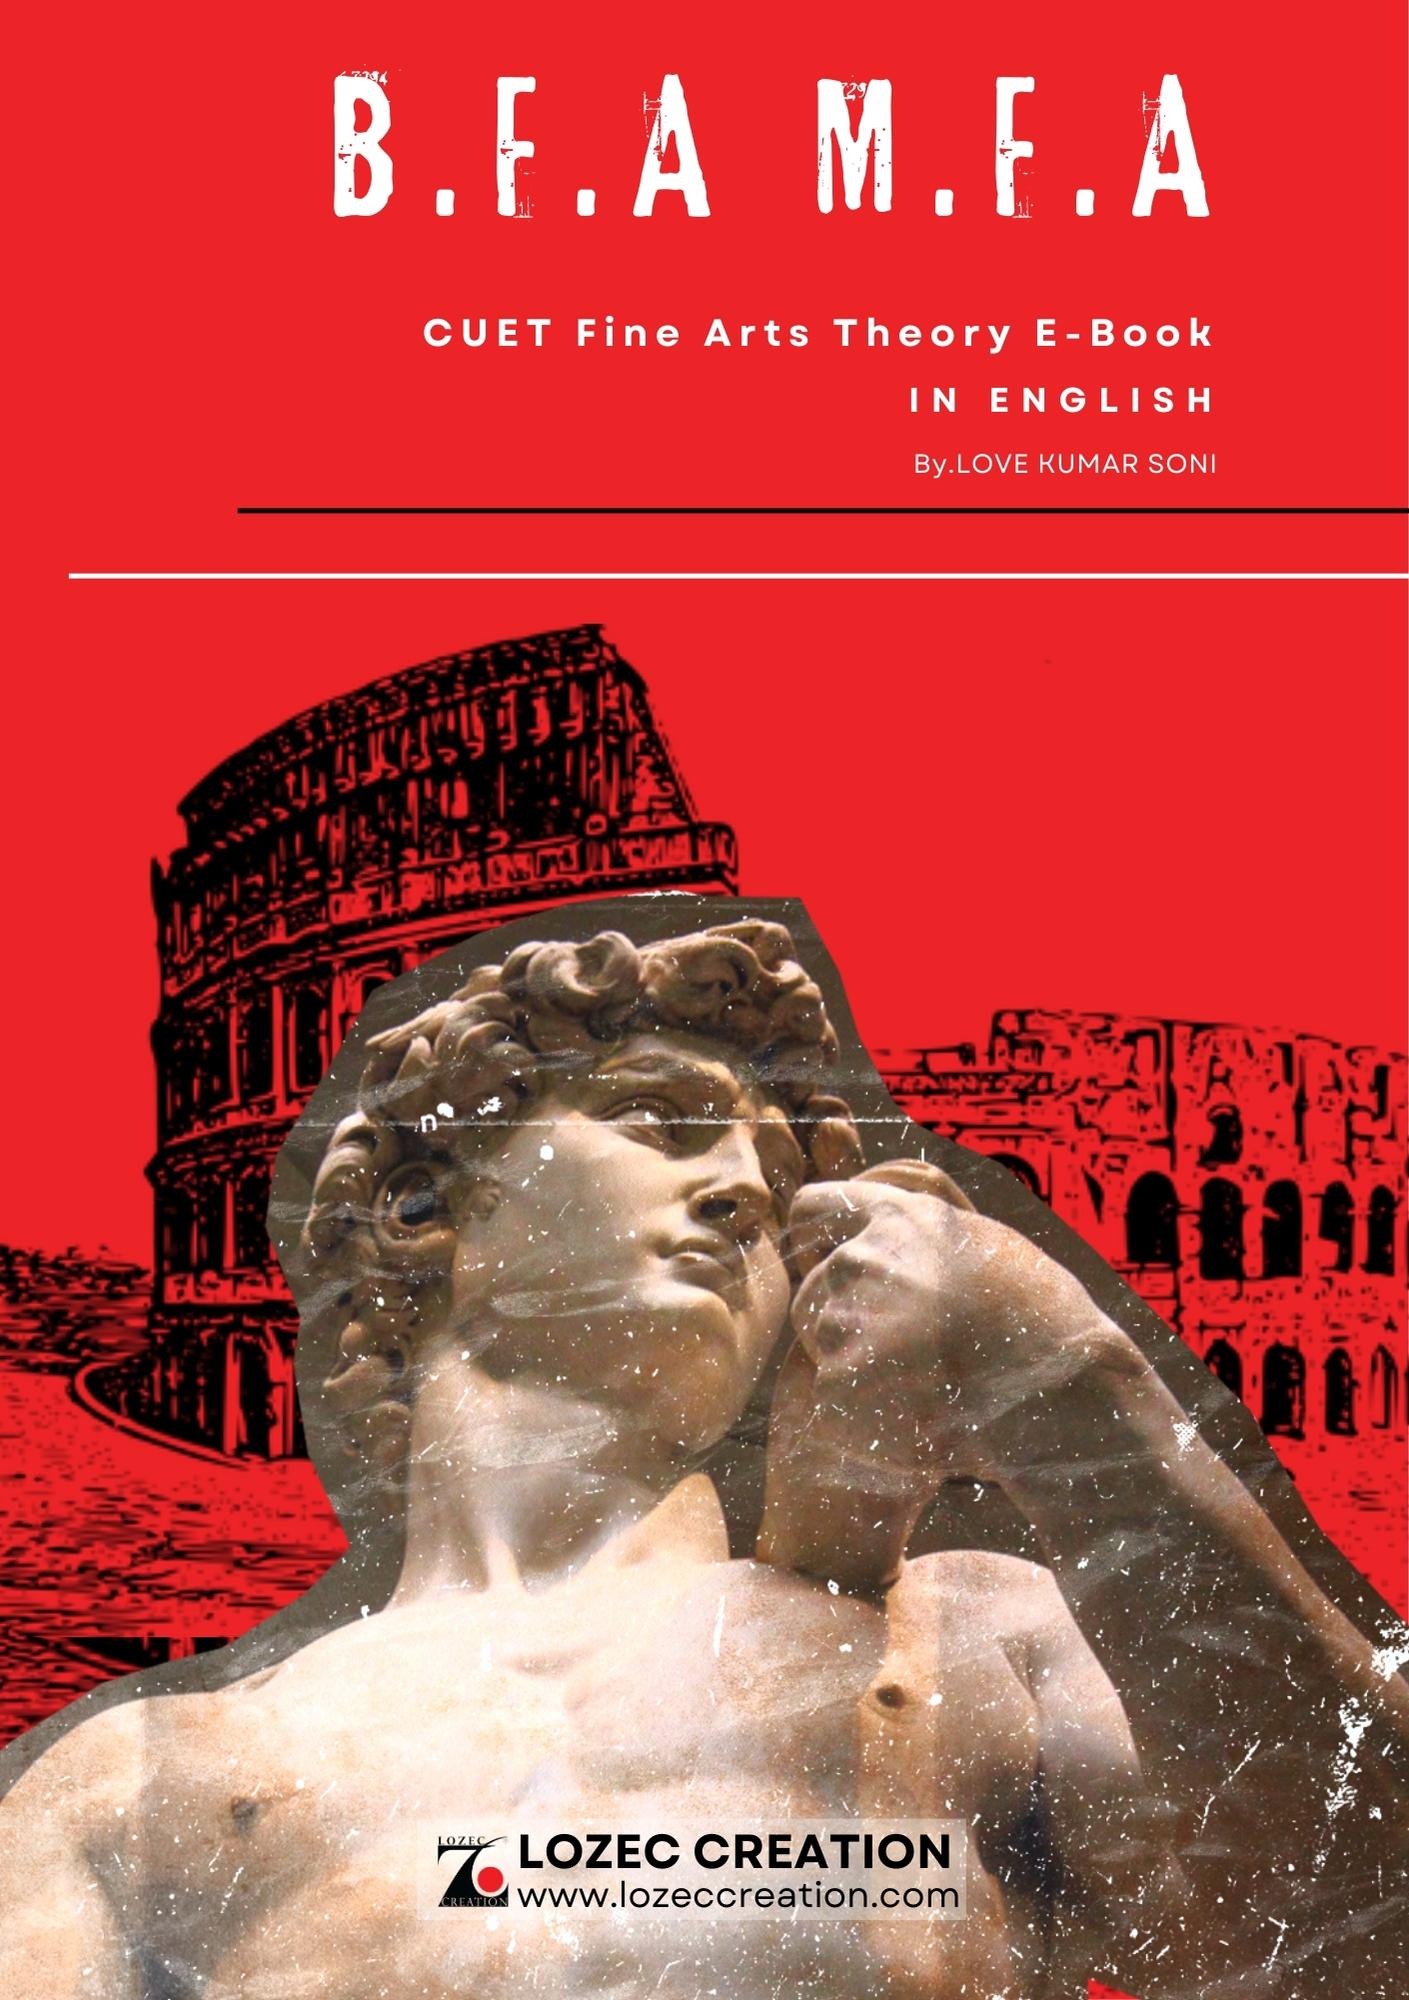 BFA/MFA & CUET fine art theory book - Lozec Creation